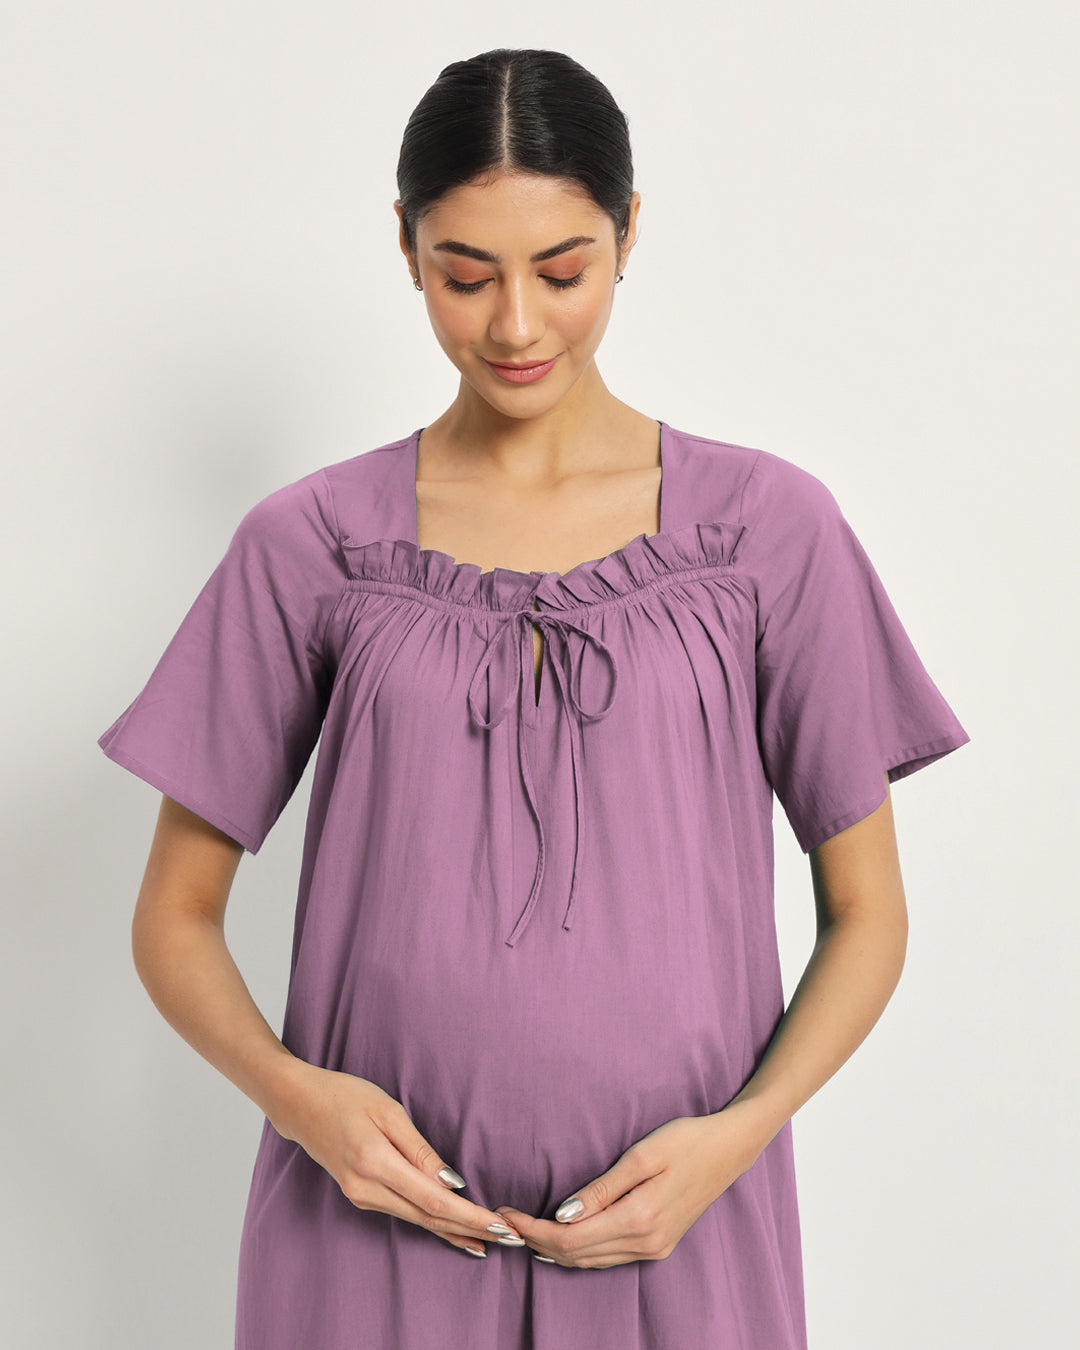 Iris Pink Mama's Glow Maternity & Nursing Dress